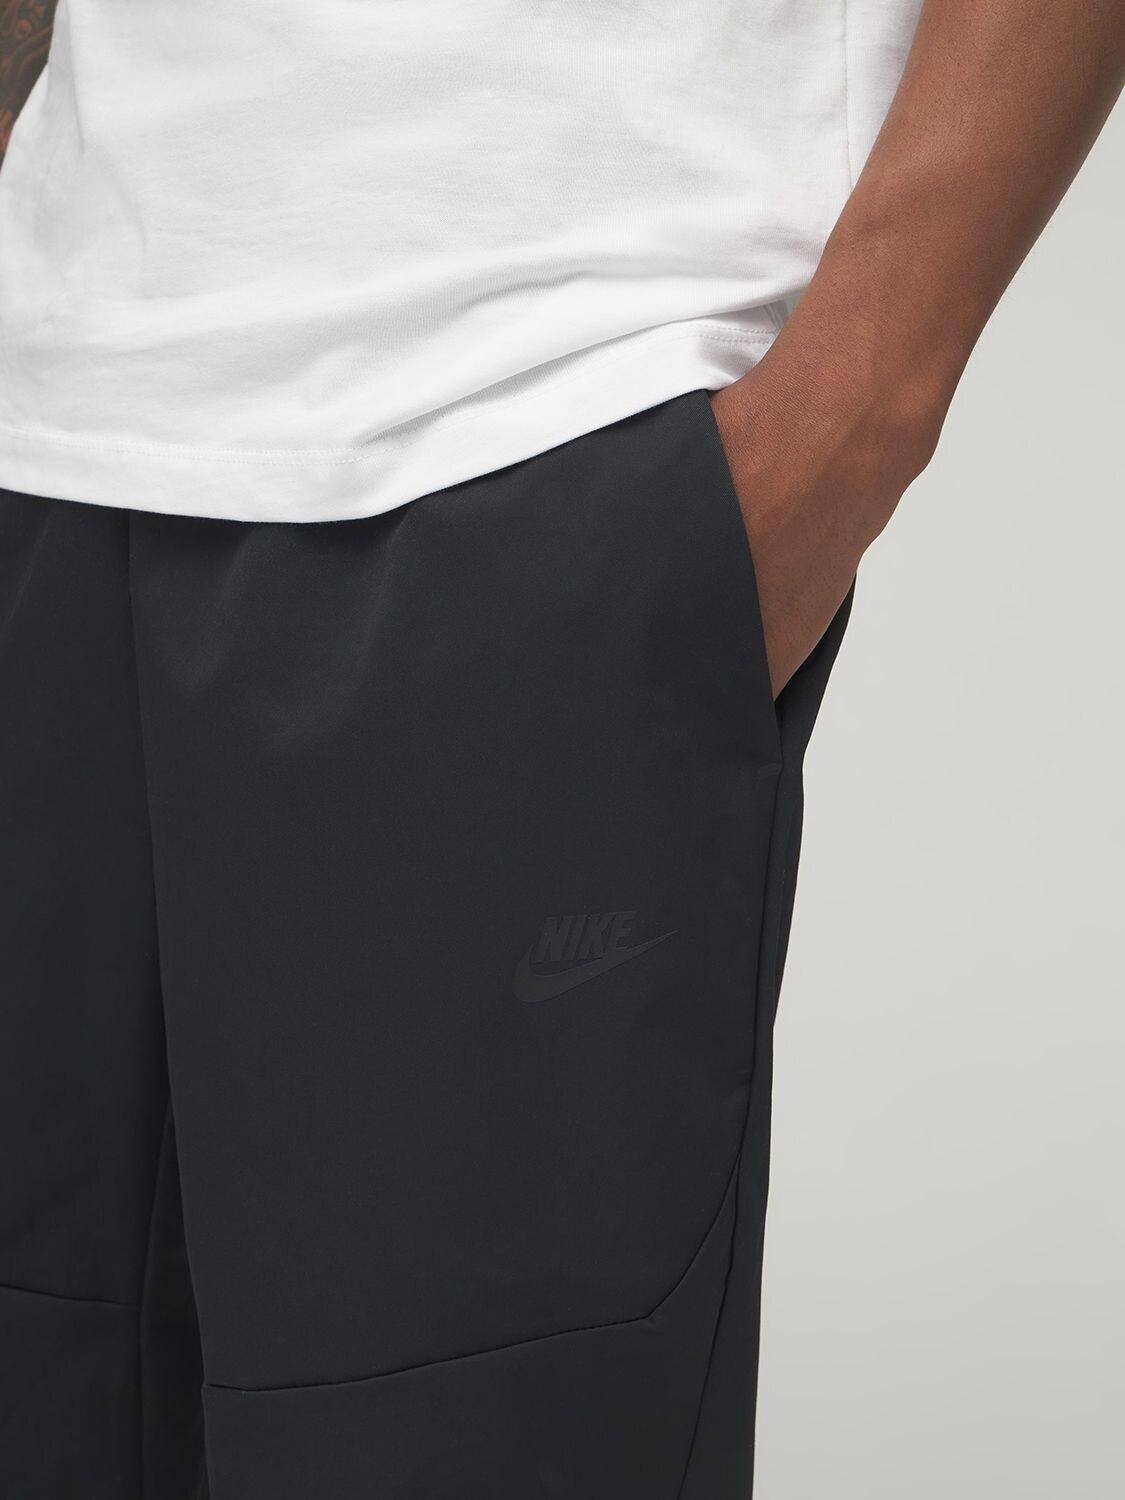 Nike Premium Essentials Woven Pants in Black for Men - Lyst